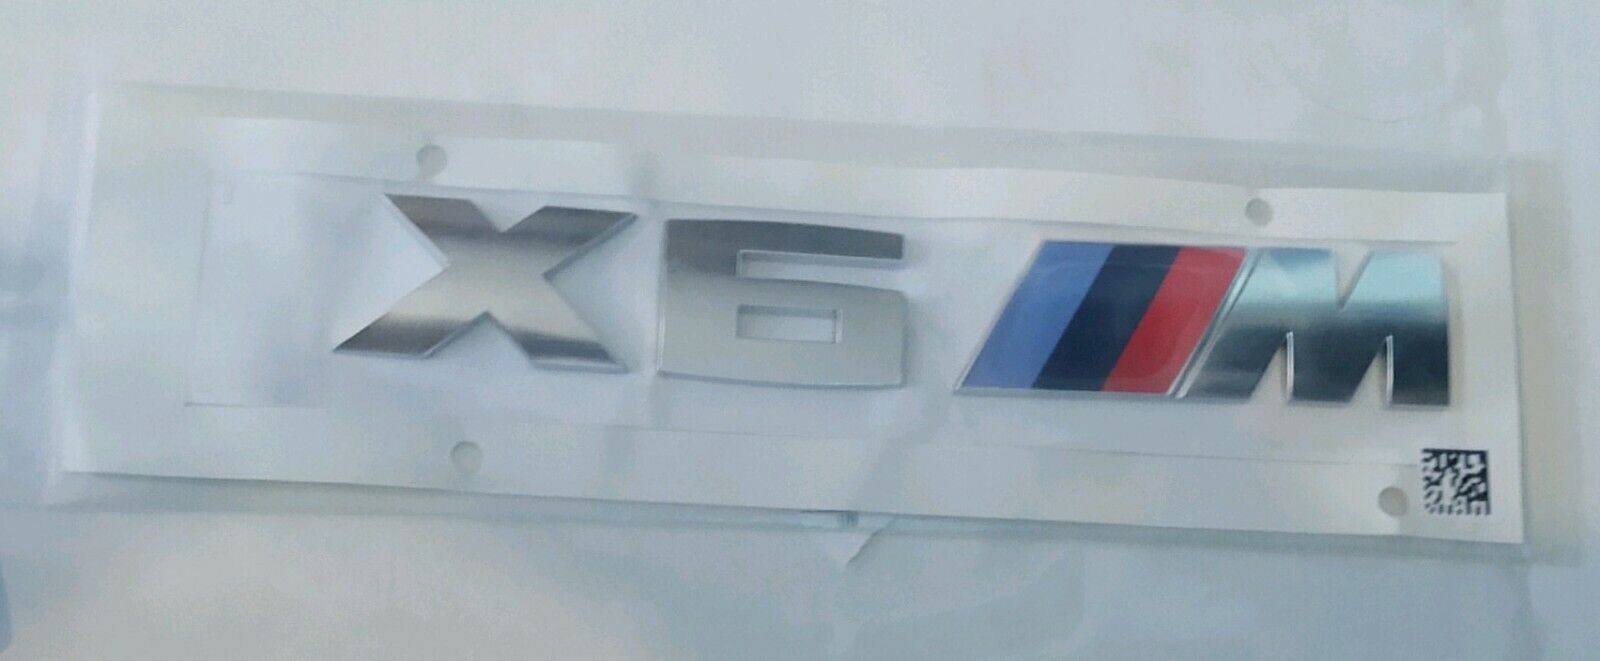 BMW OEM F96 X6 Tailgate Rear Standard Chrome Emblem Badge Factory Brand New